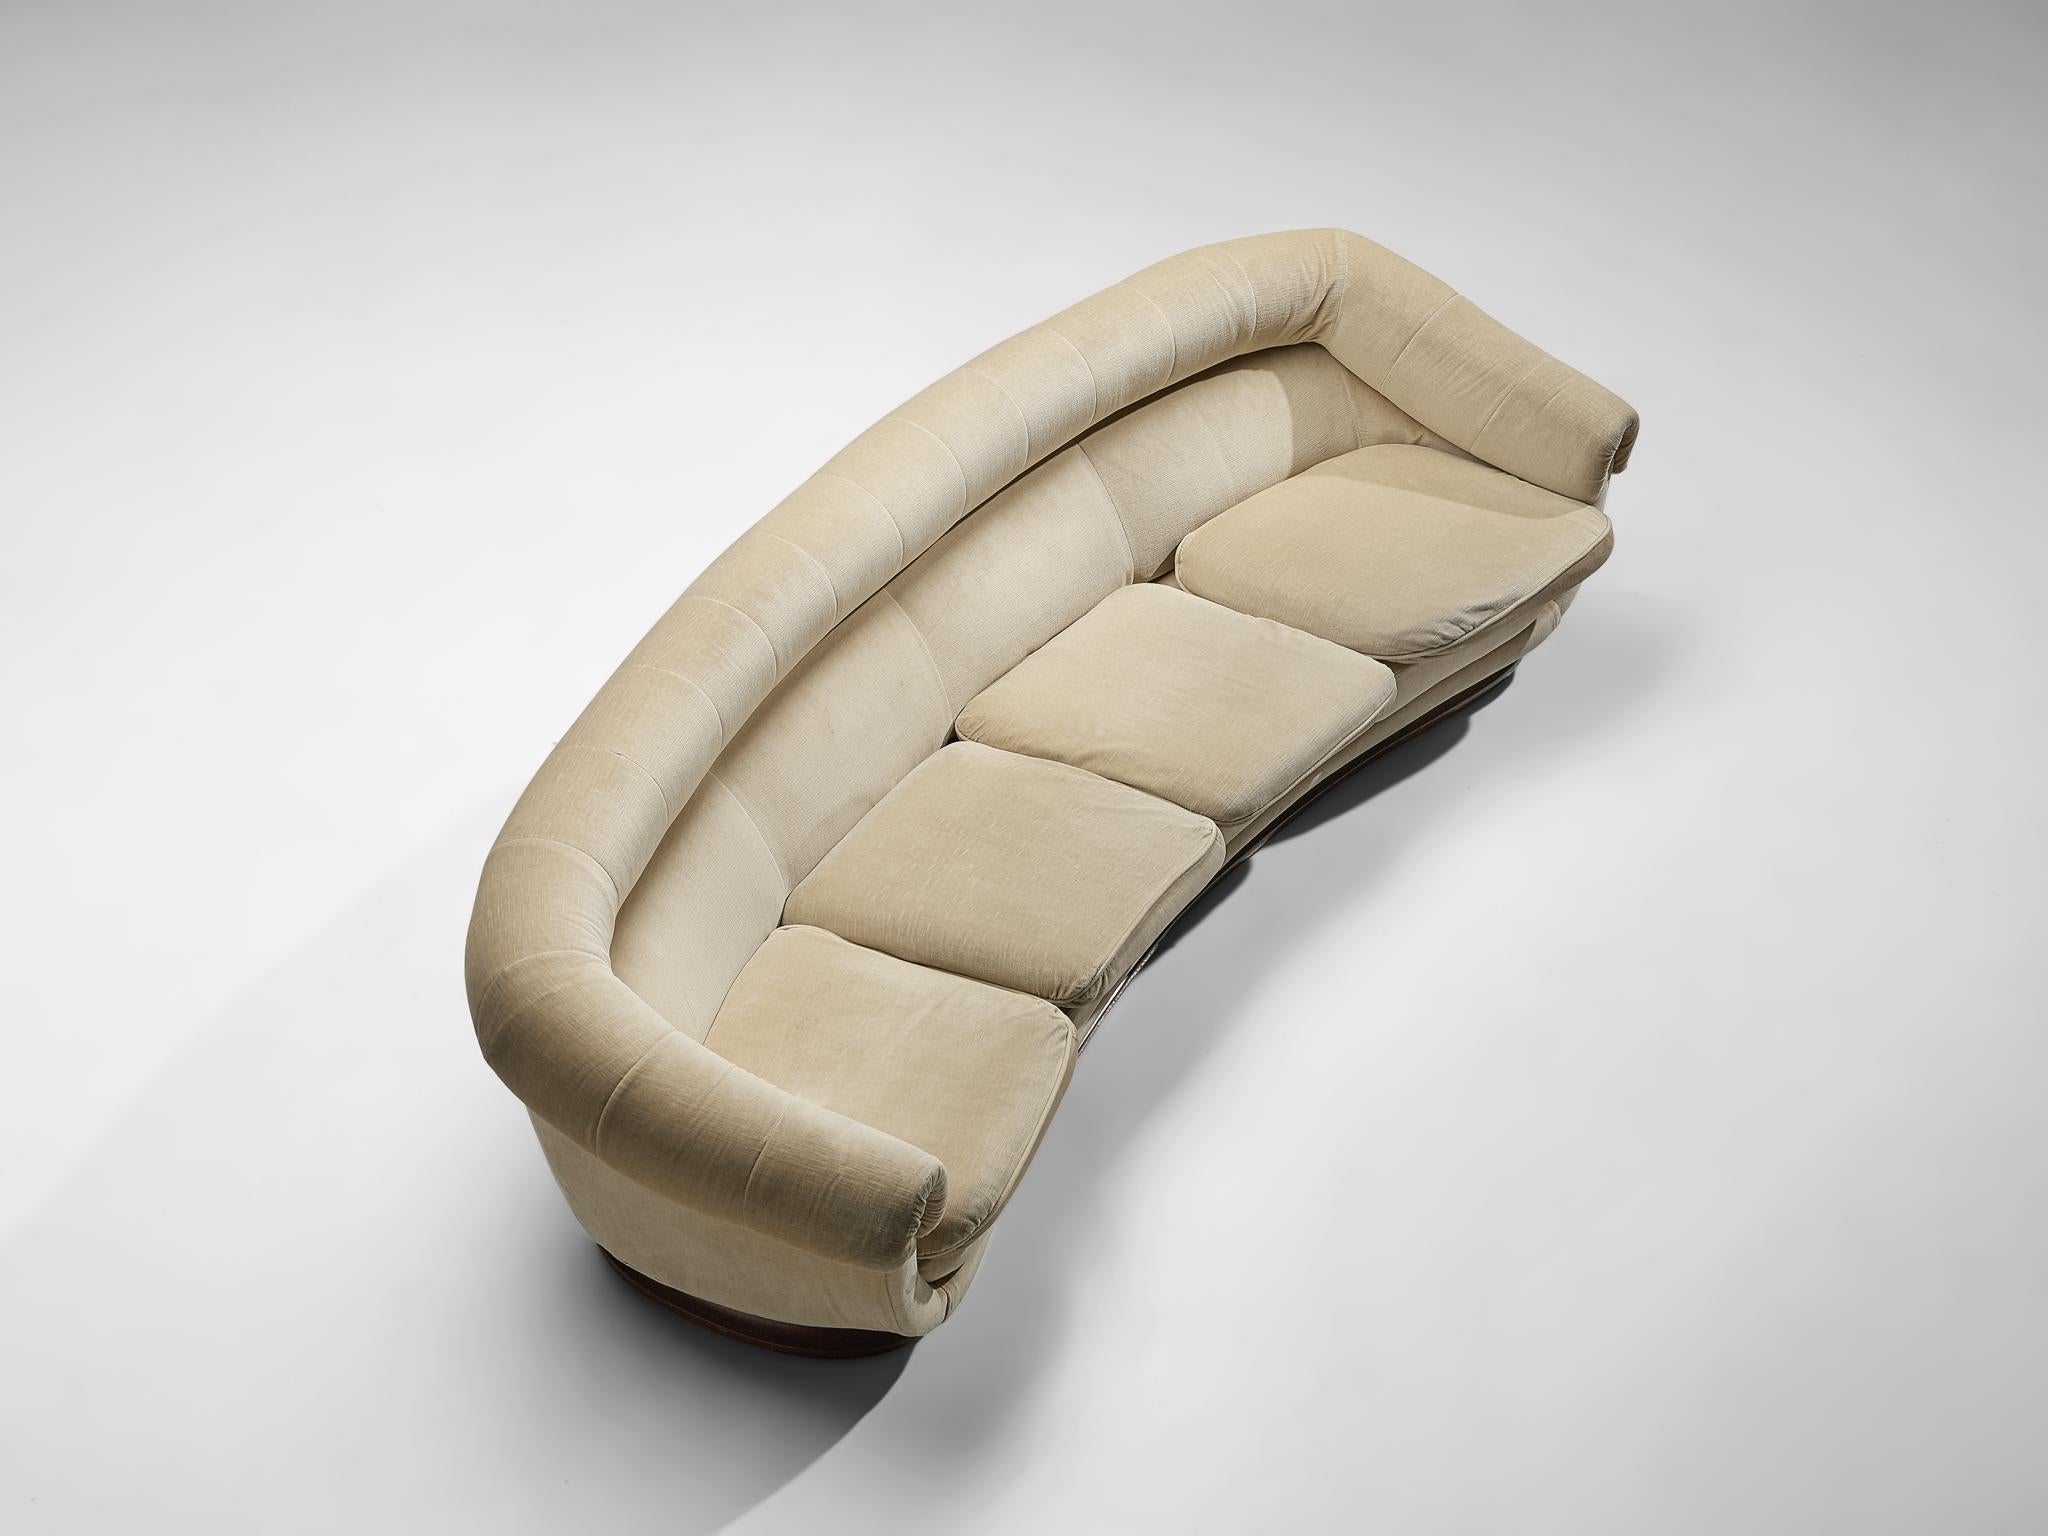 Italian Art Deco Sofa with Curved Shape in Beige Velvet